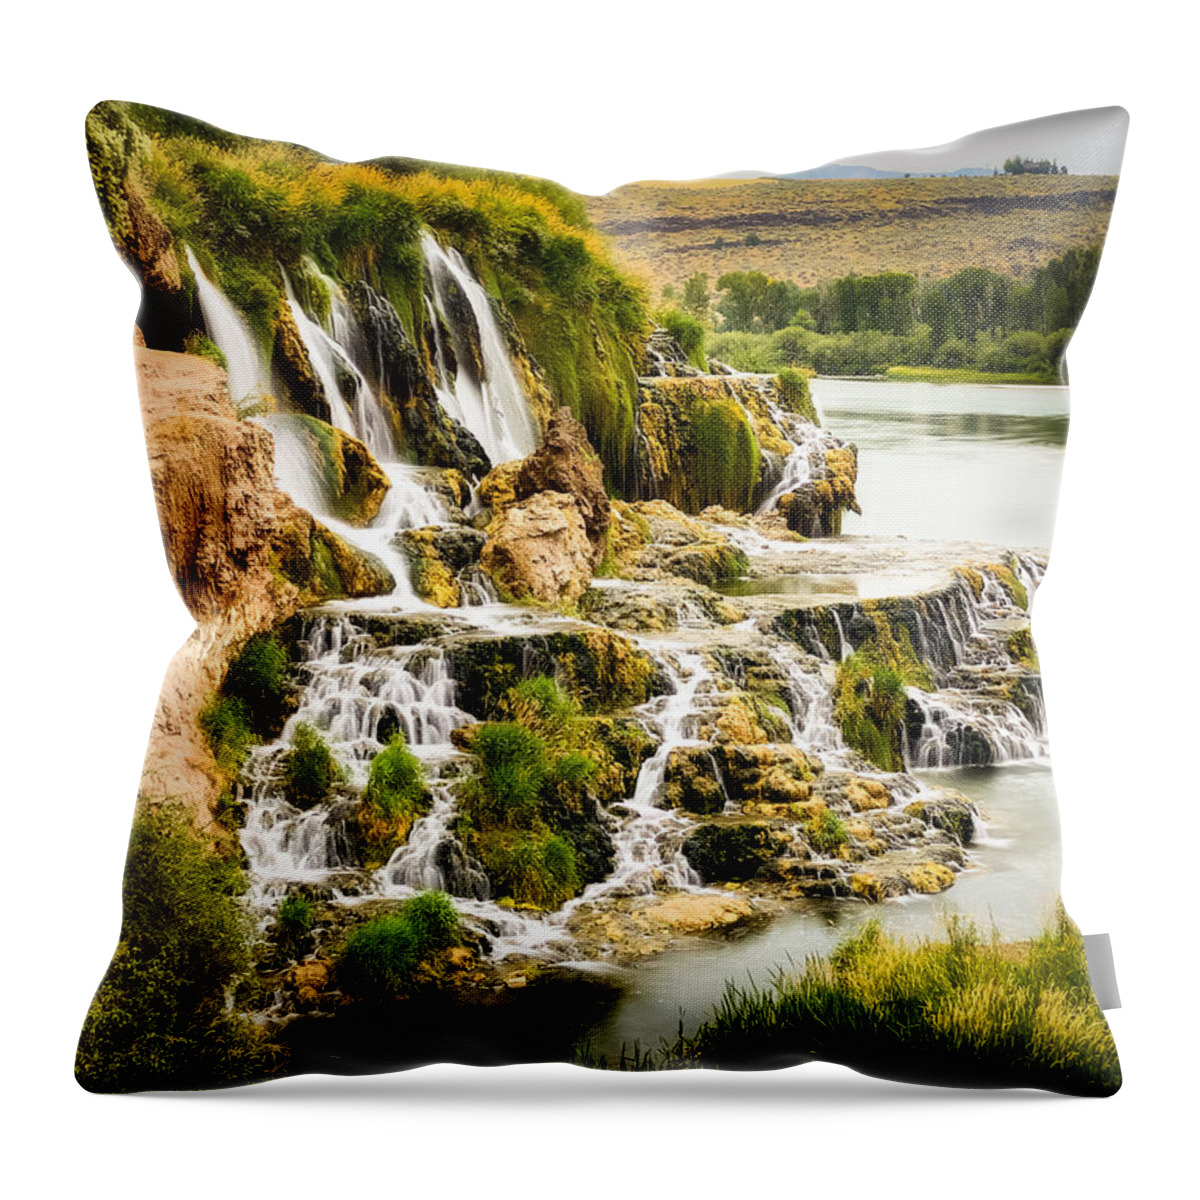 Fall Creek Falls Throw Pillow featuring the photograph Fall Creek Falls, Idaho by Bradley Morris